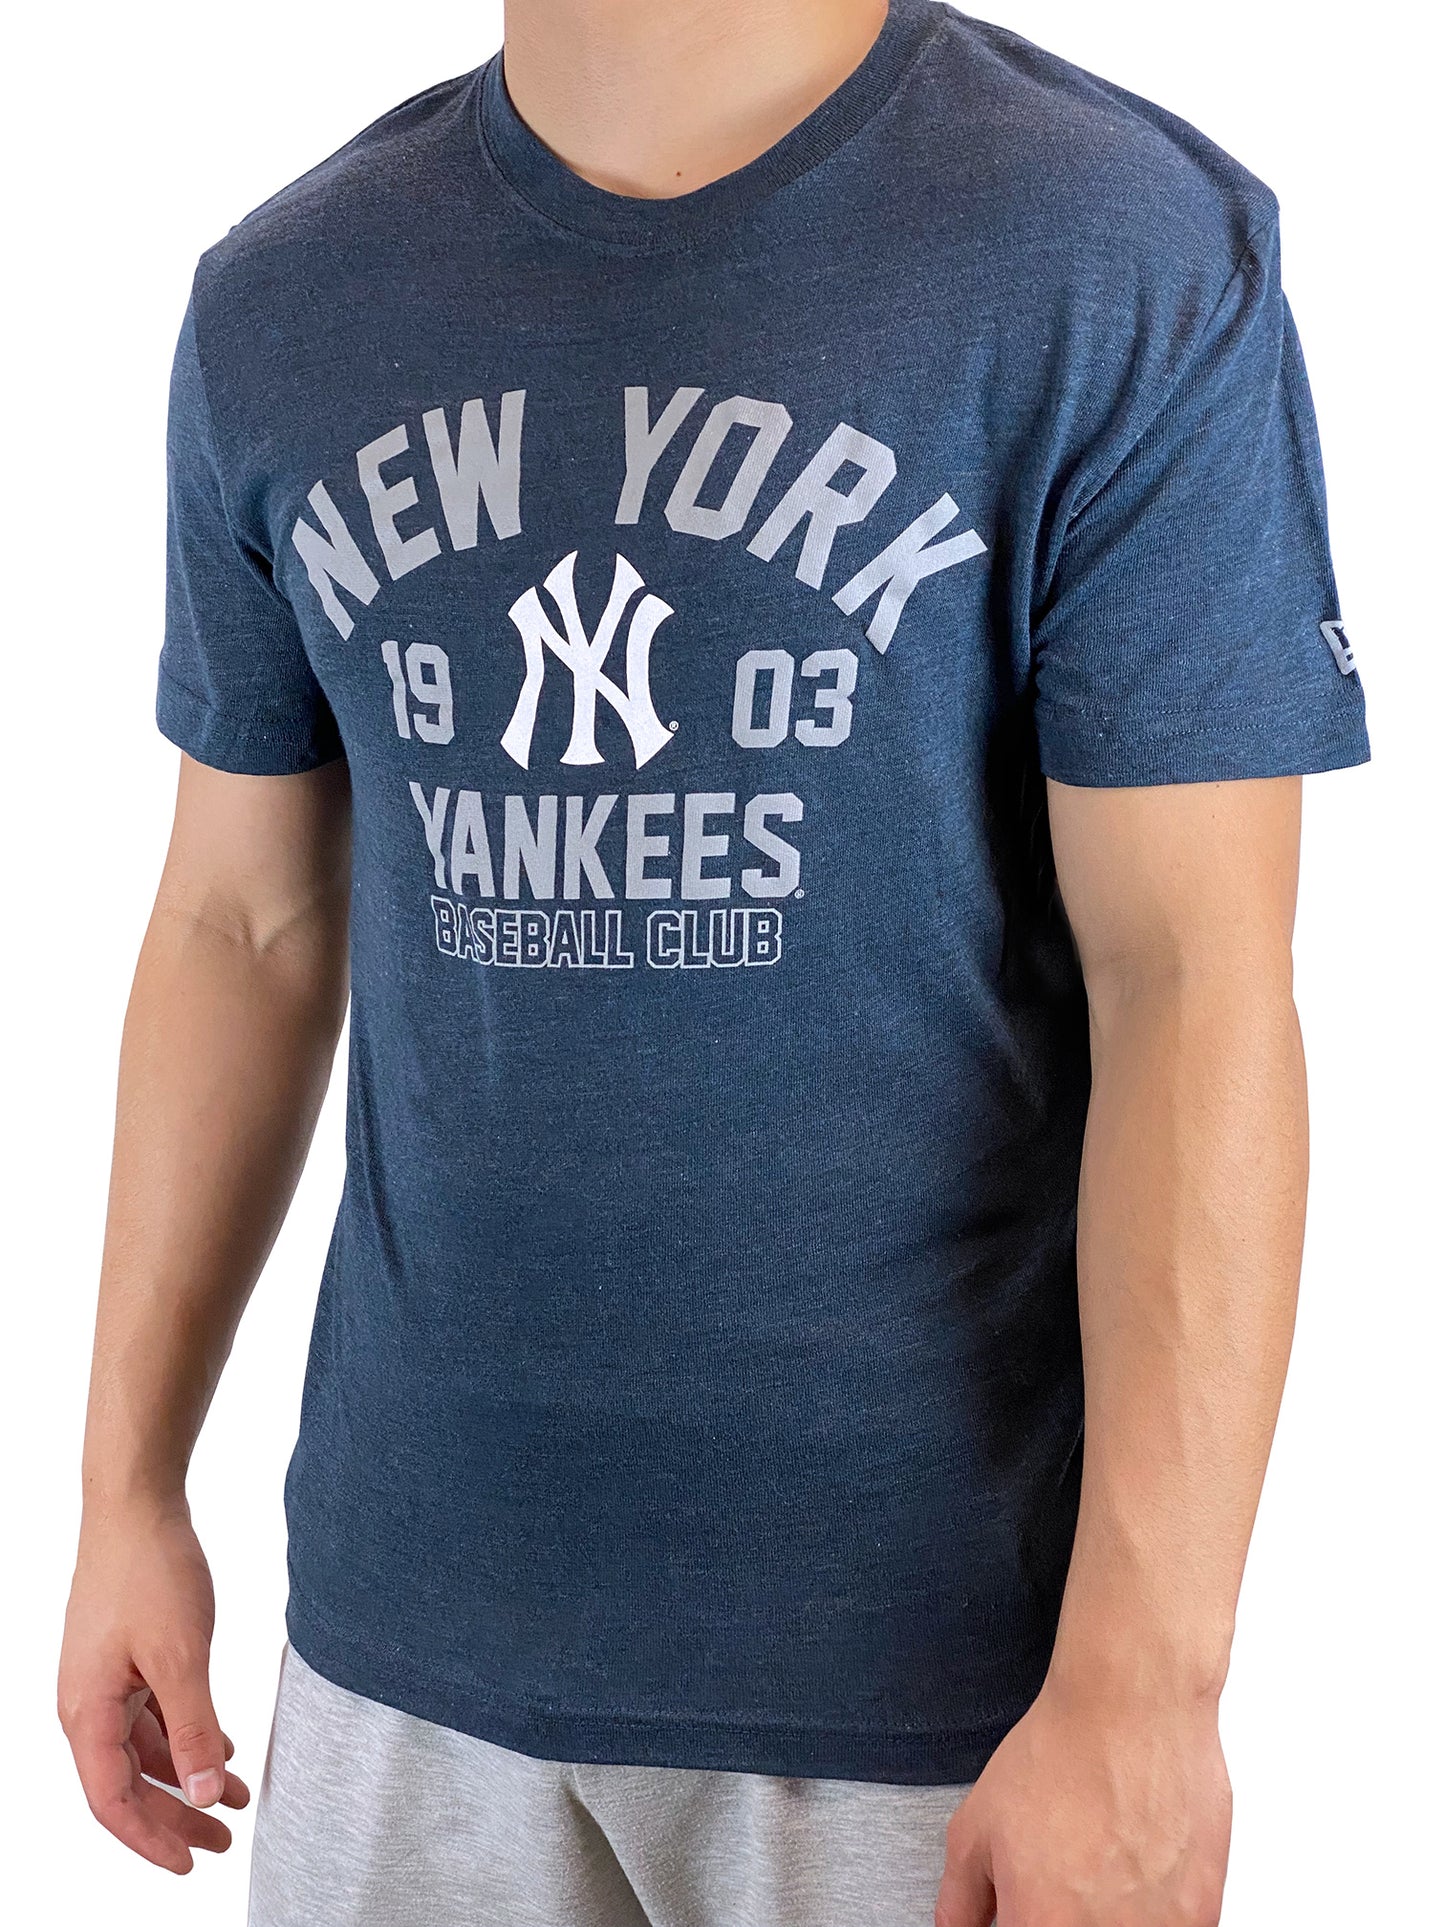 Yankees Baseball Shirt, New York Baseball Shirt for Women, Men and